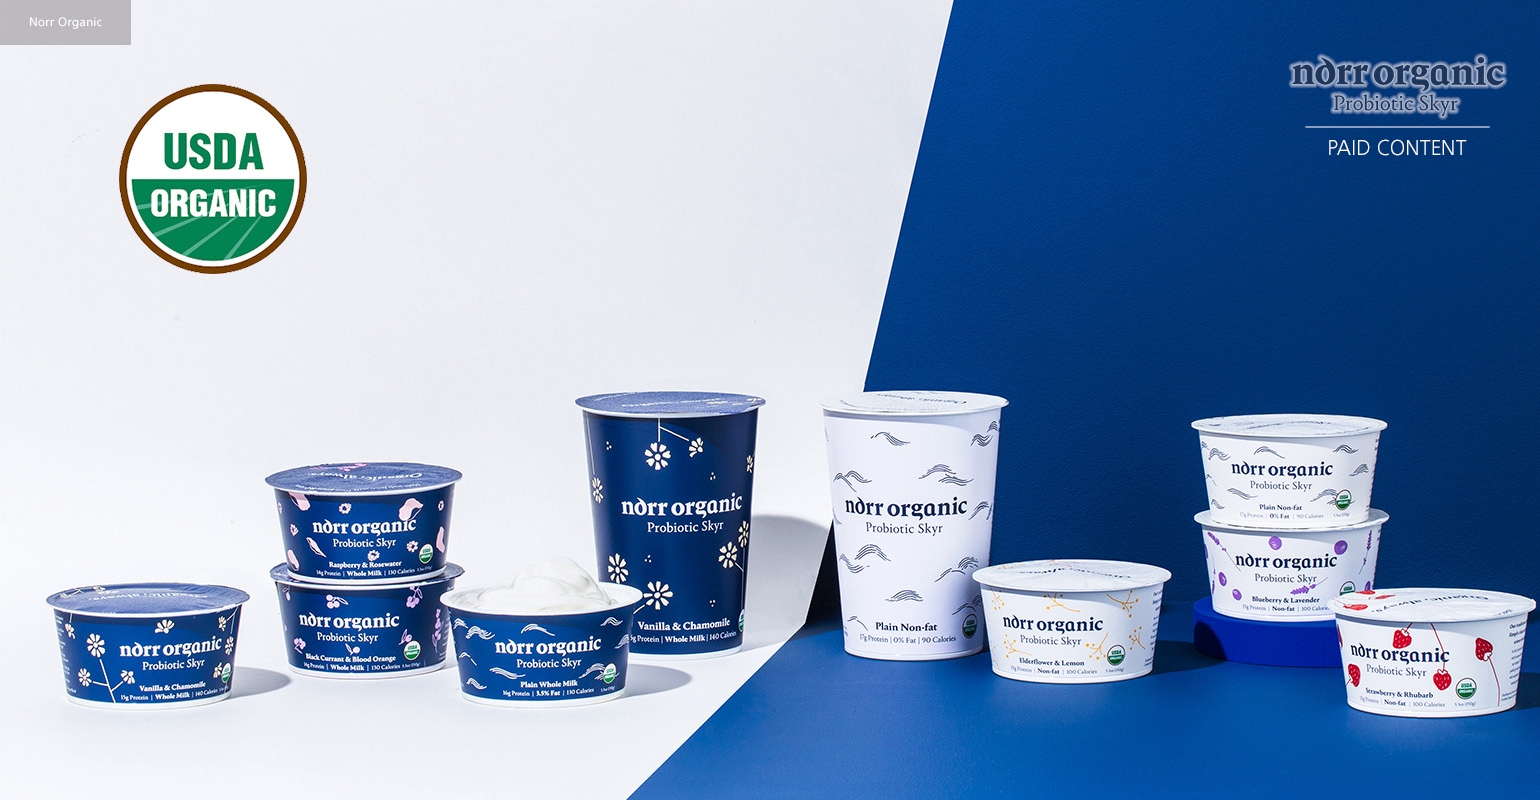 Buy Organic Plain Skyr Yogurt (Non-fat) For Delivery Near You